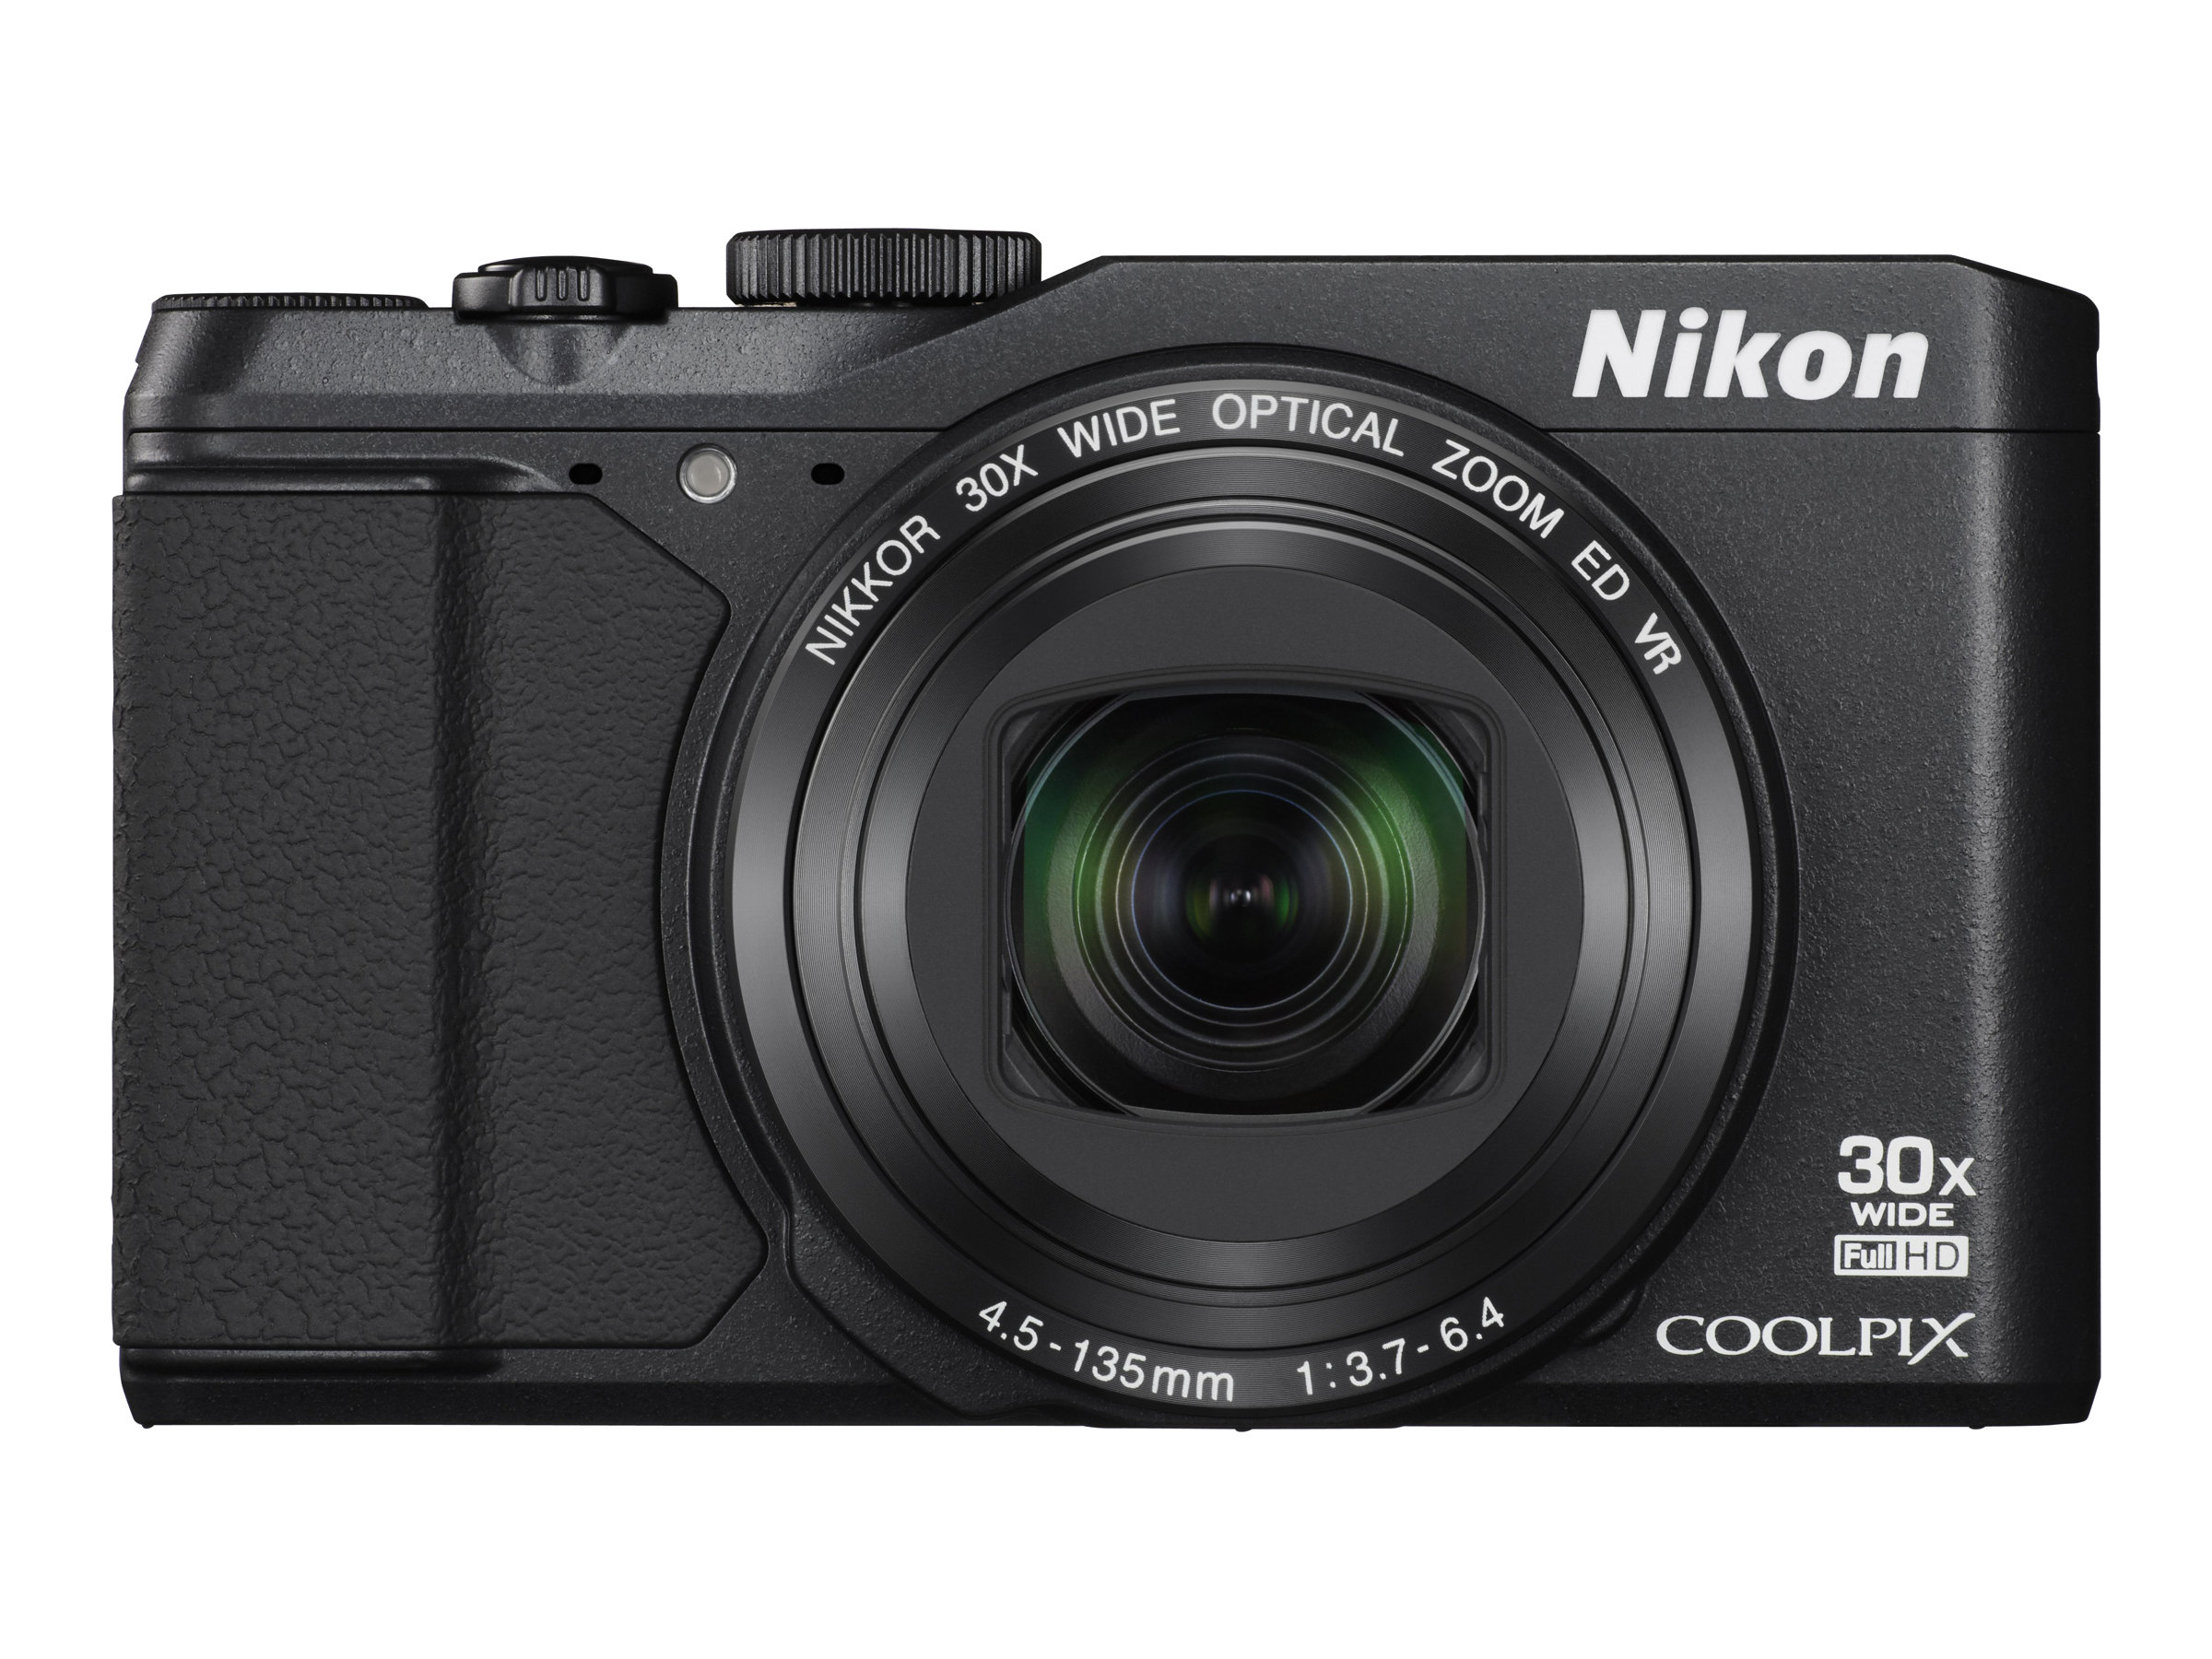 Nikon Coolpix S9900 - Digital camera - compact - 16.0 MP - 1080p - 30x optical zoom - Wi-Fi, NFC - black - image 2 of 6